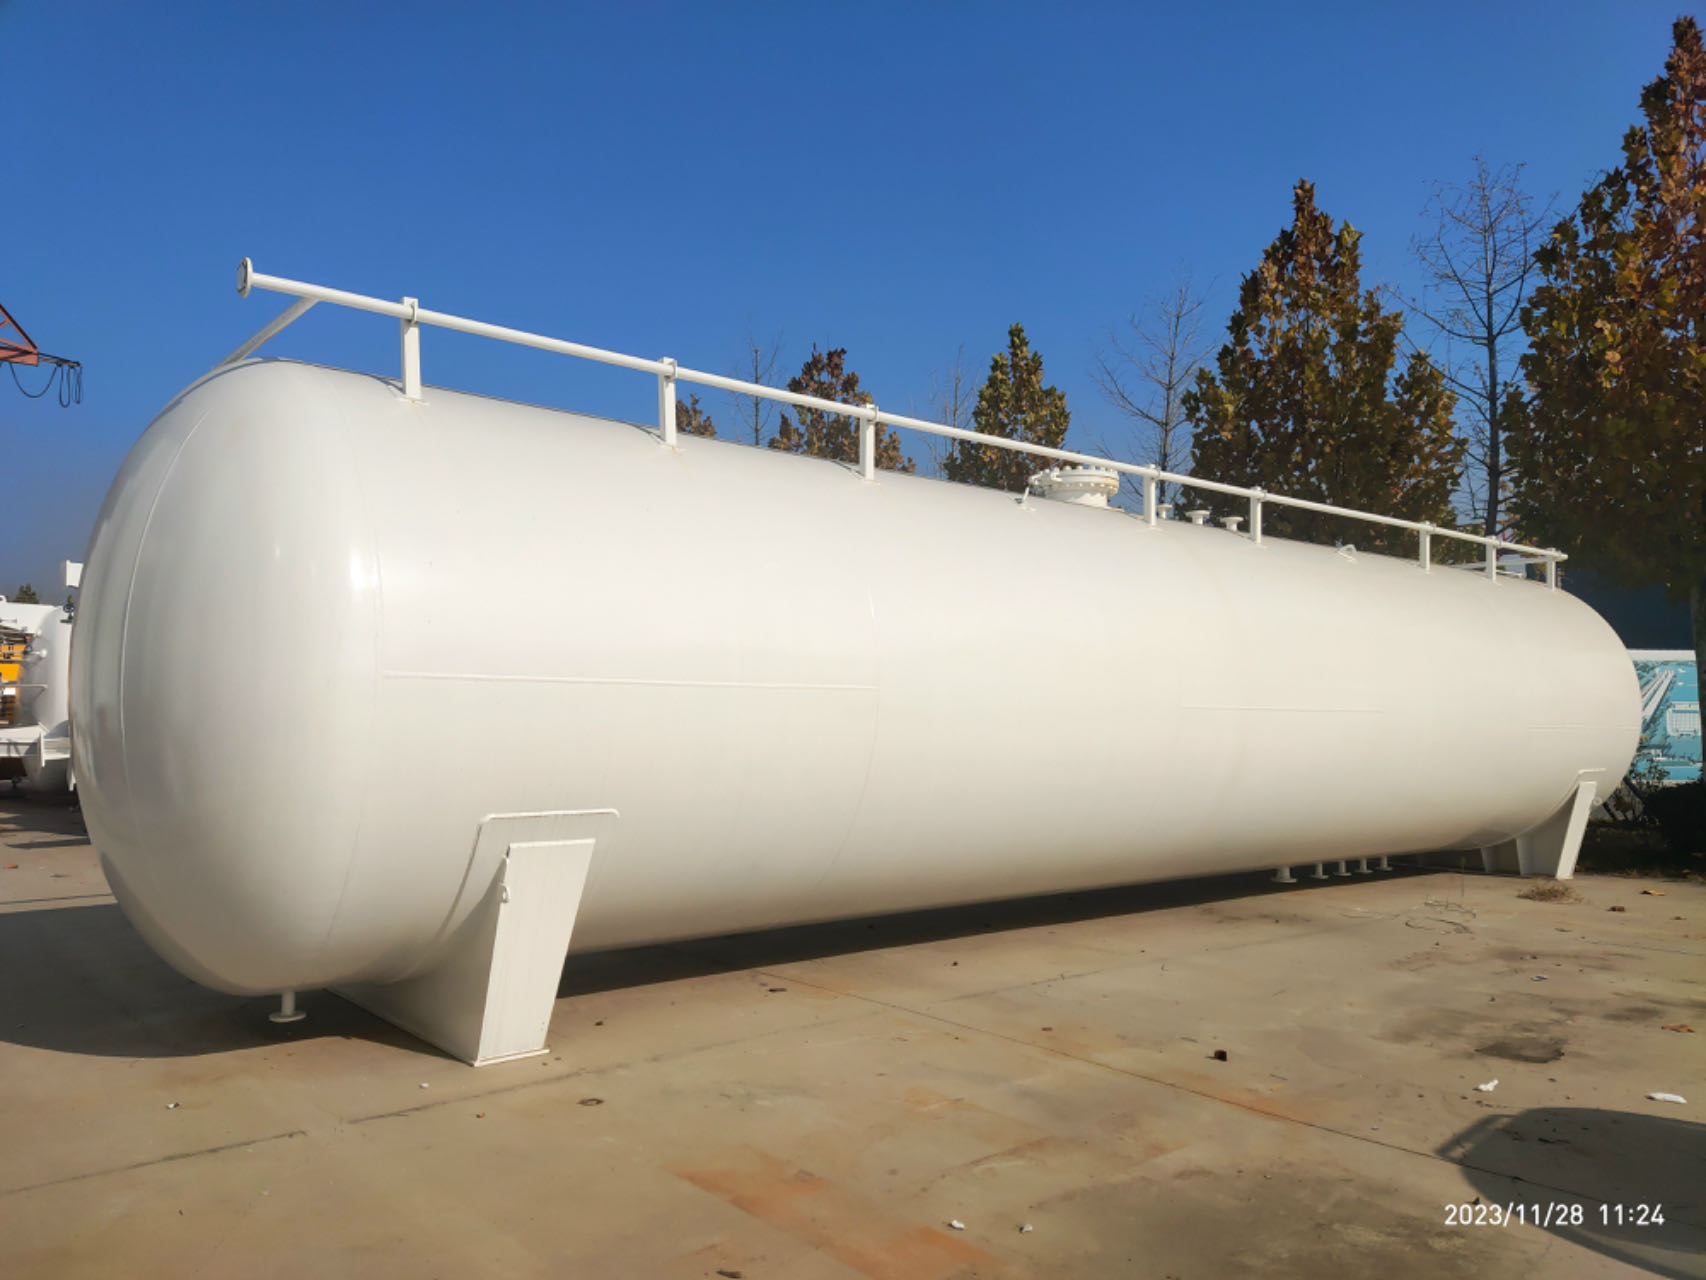 Liquefied gas storage tank inspection test